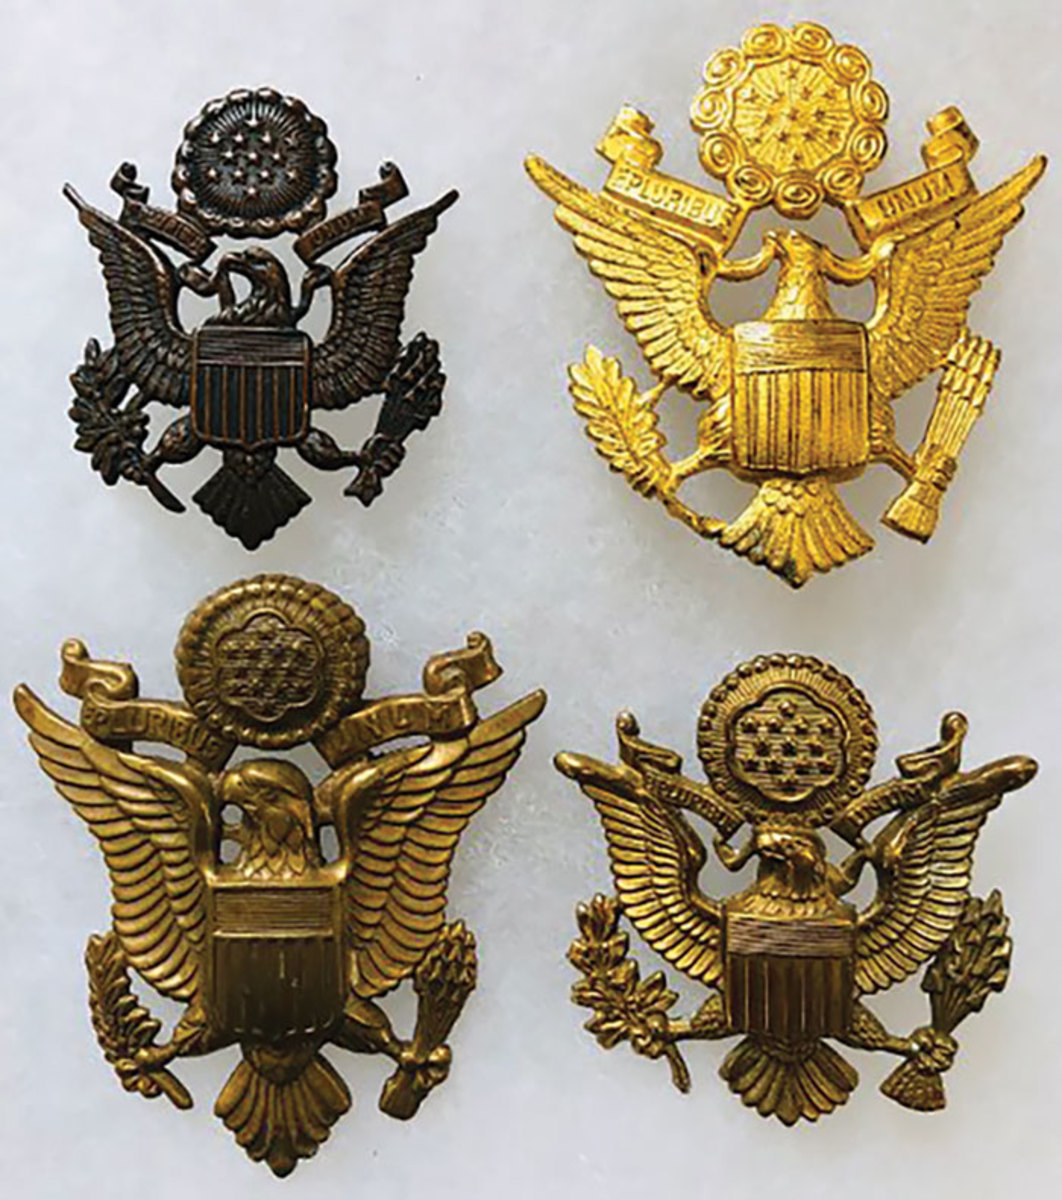 Sold at Auction: US Forces Shoulder Patch & Cap Badge Pins